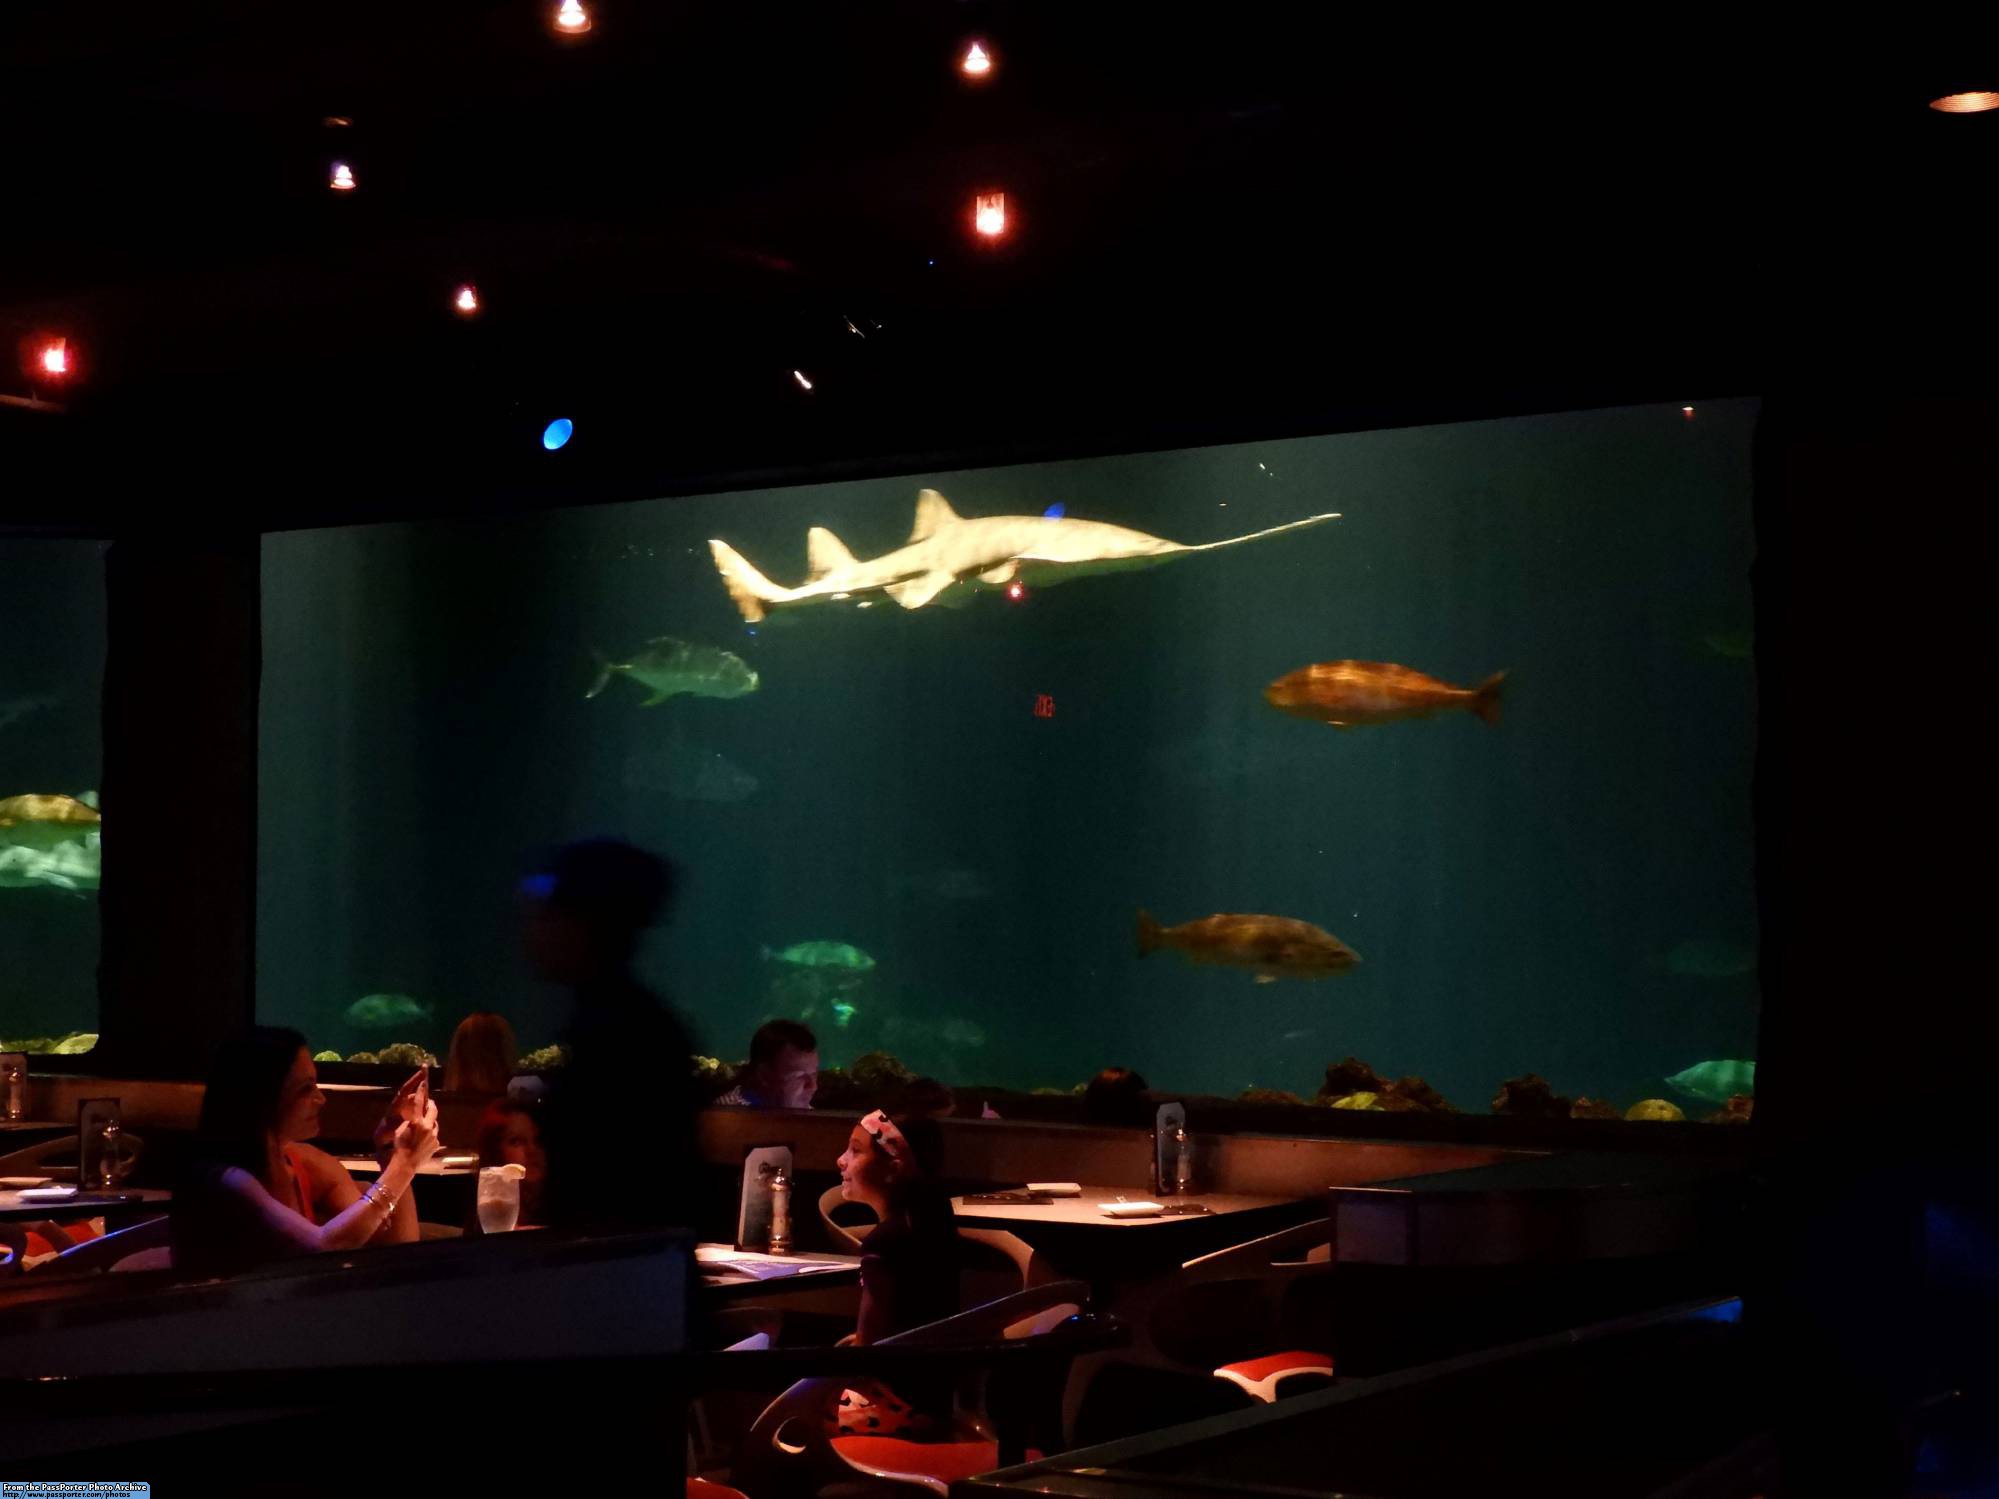 Sharks Underwater Grill